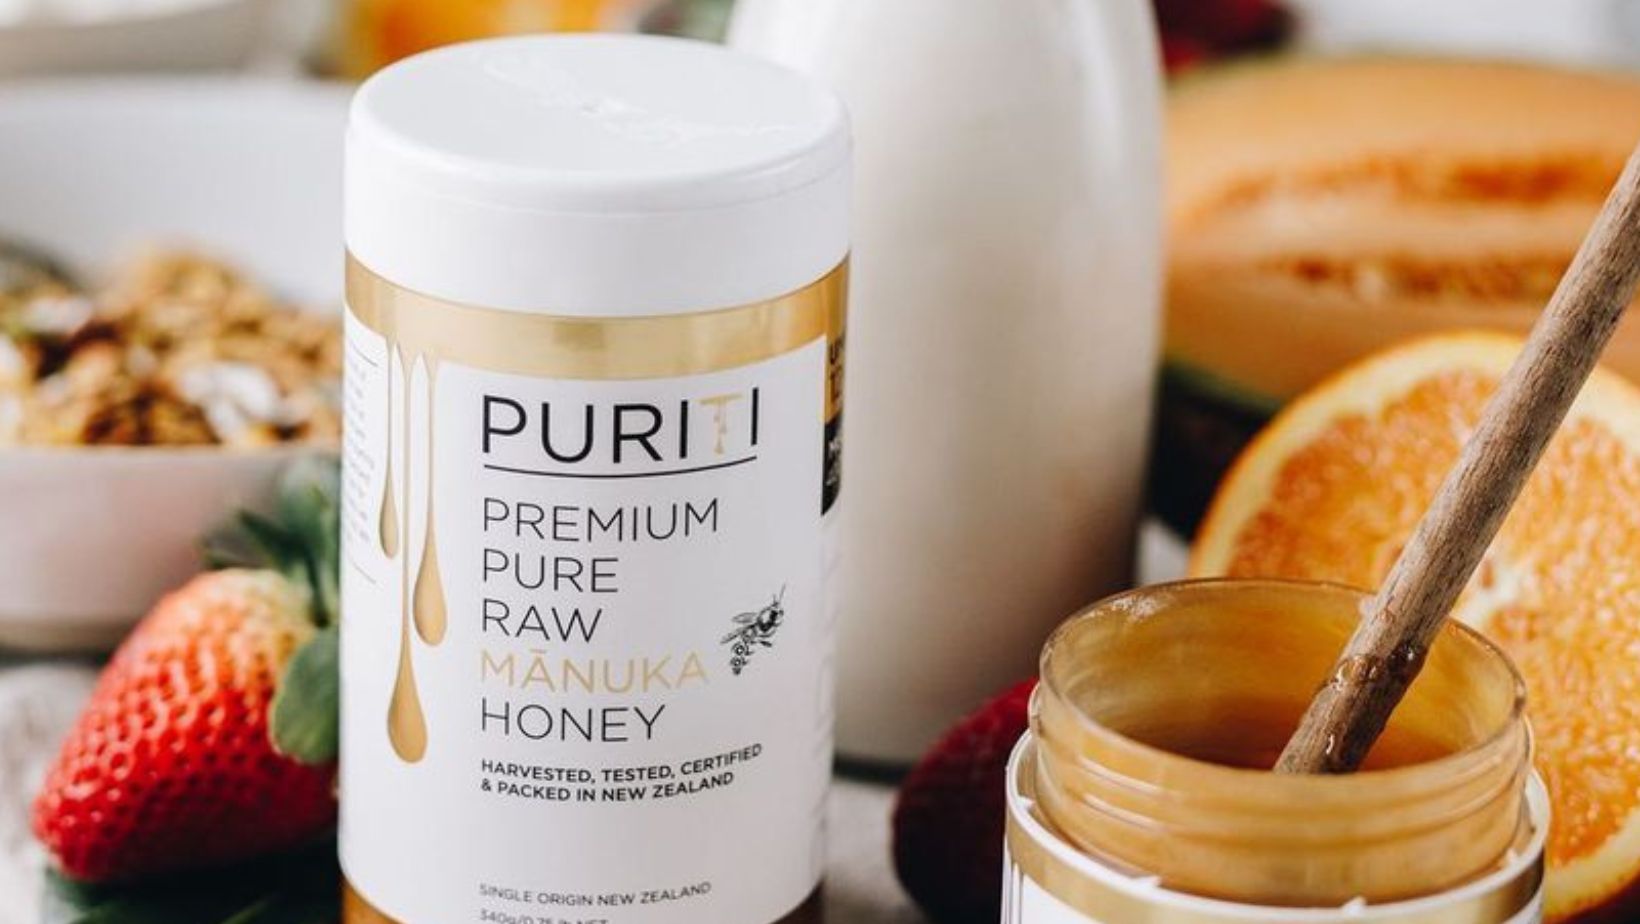 Stock Up On Winter Wellness With Pure Mānuka Honey - PURITI